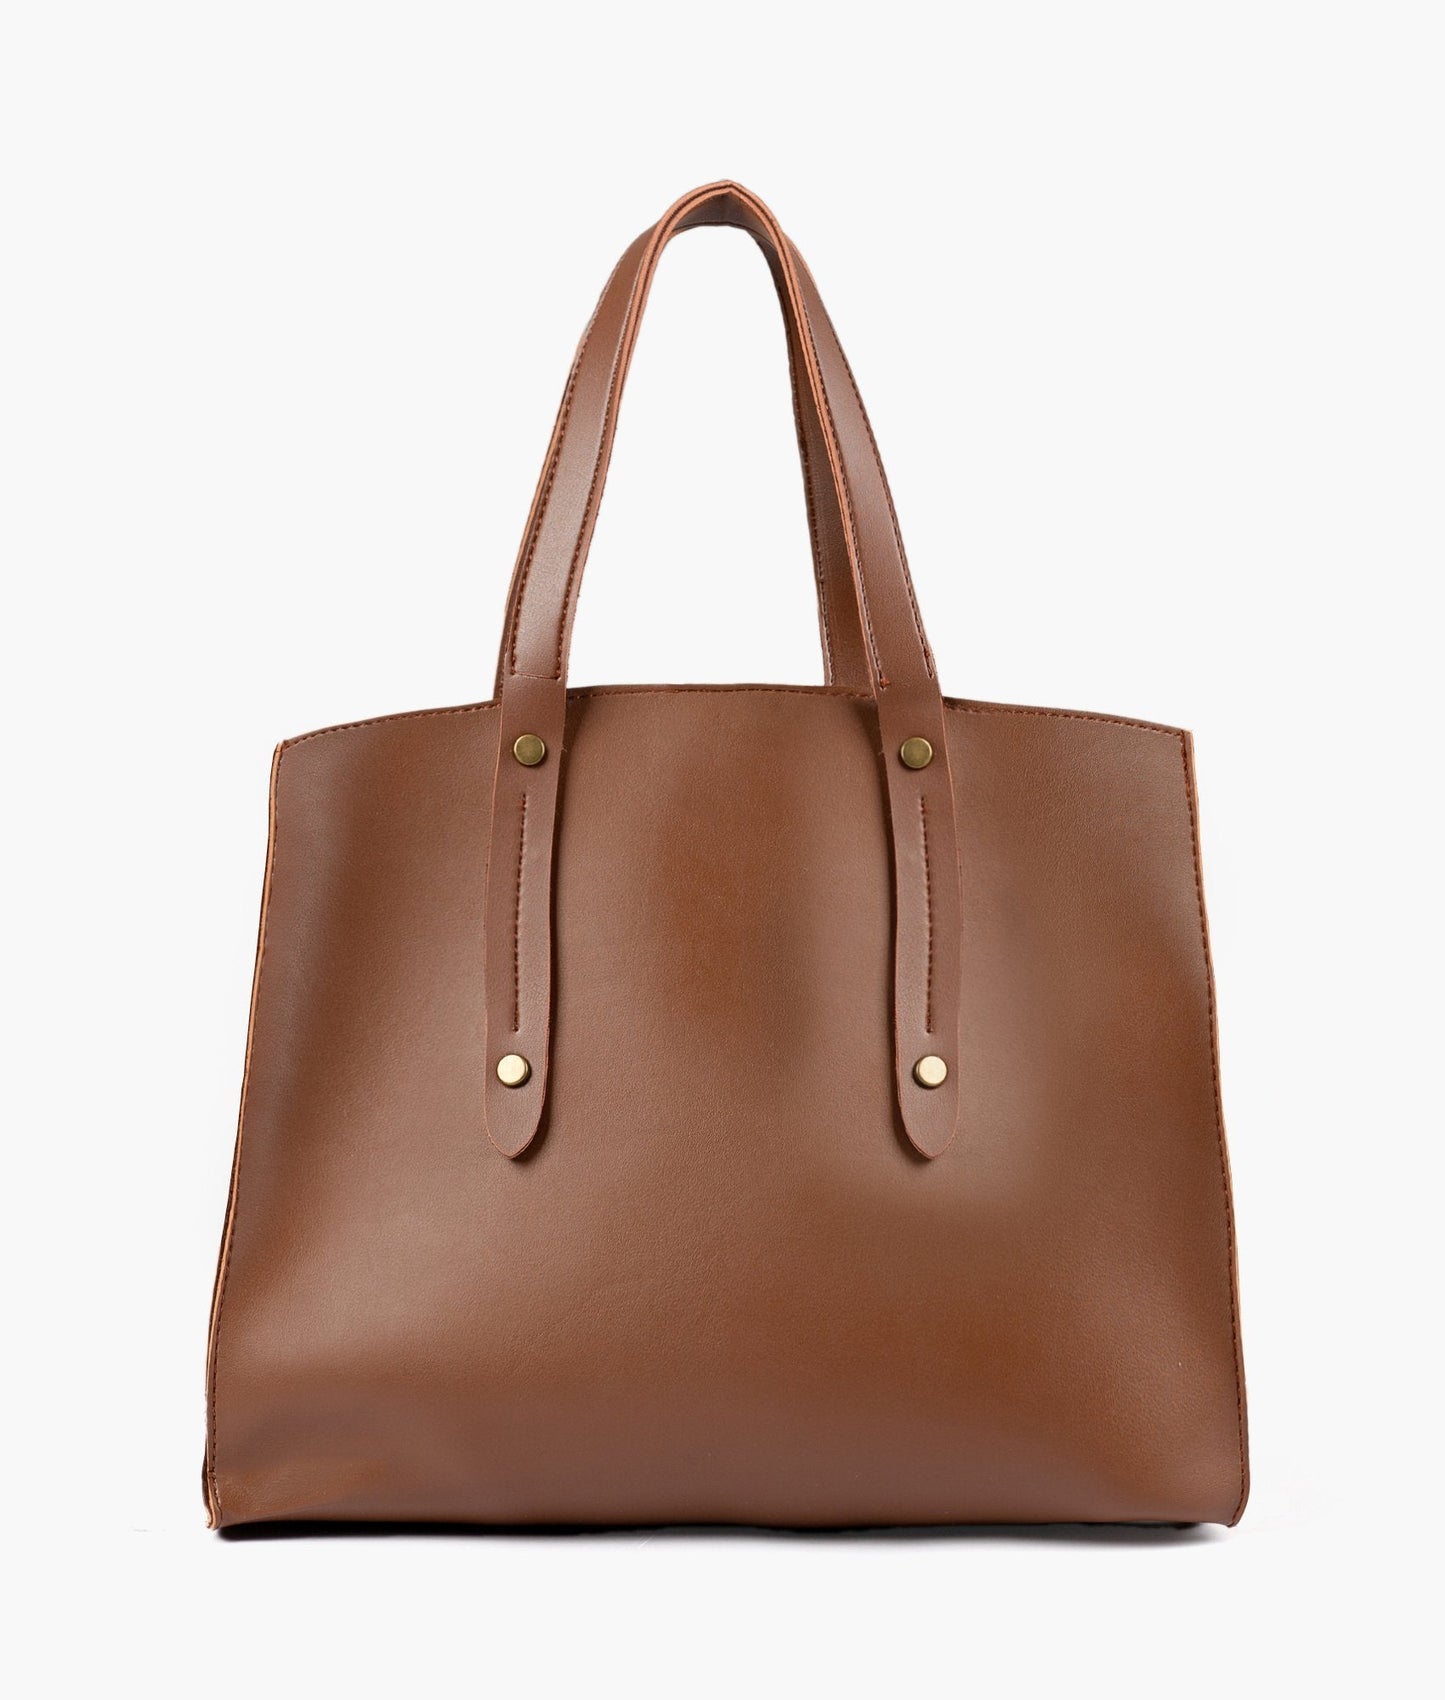 Brown Handbag For Girls 598